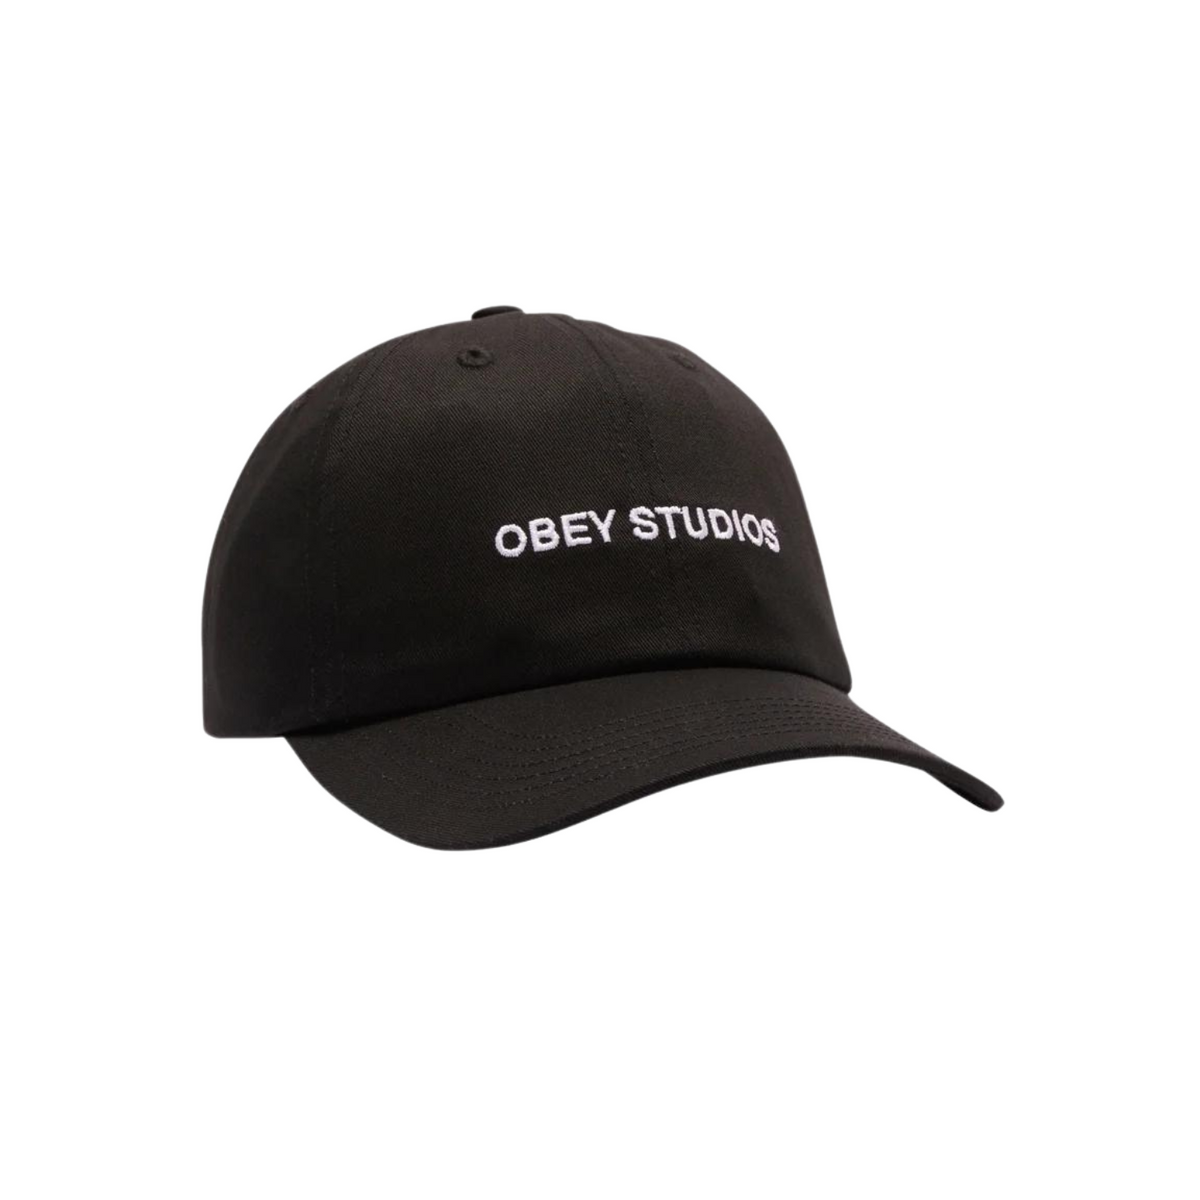 OBEY STUDIOS STRAP BACK HAT - BLACK